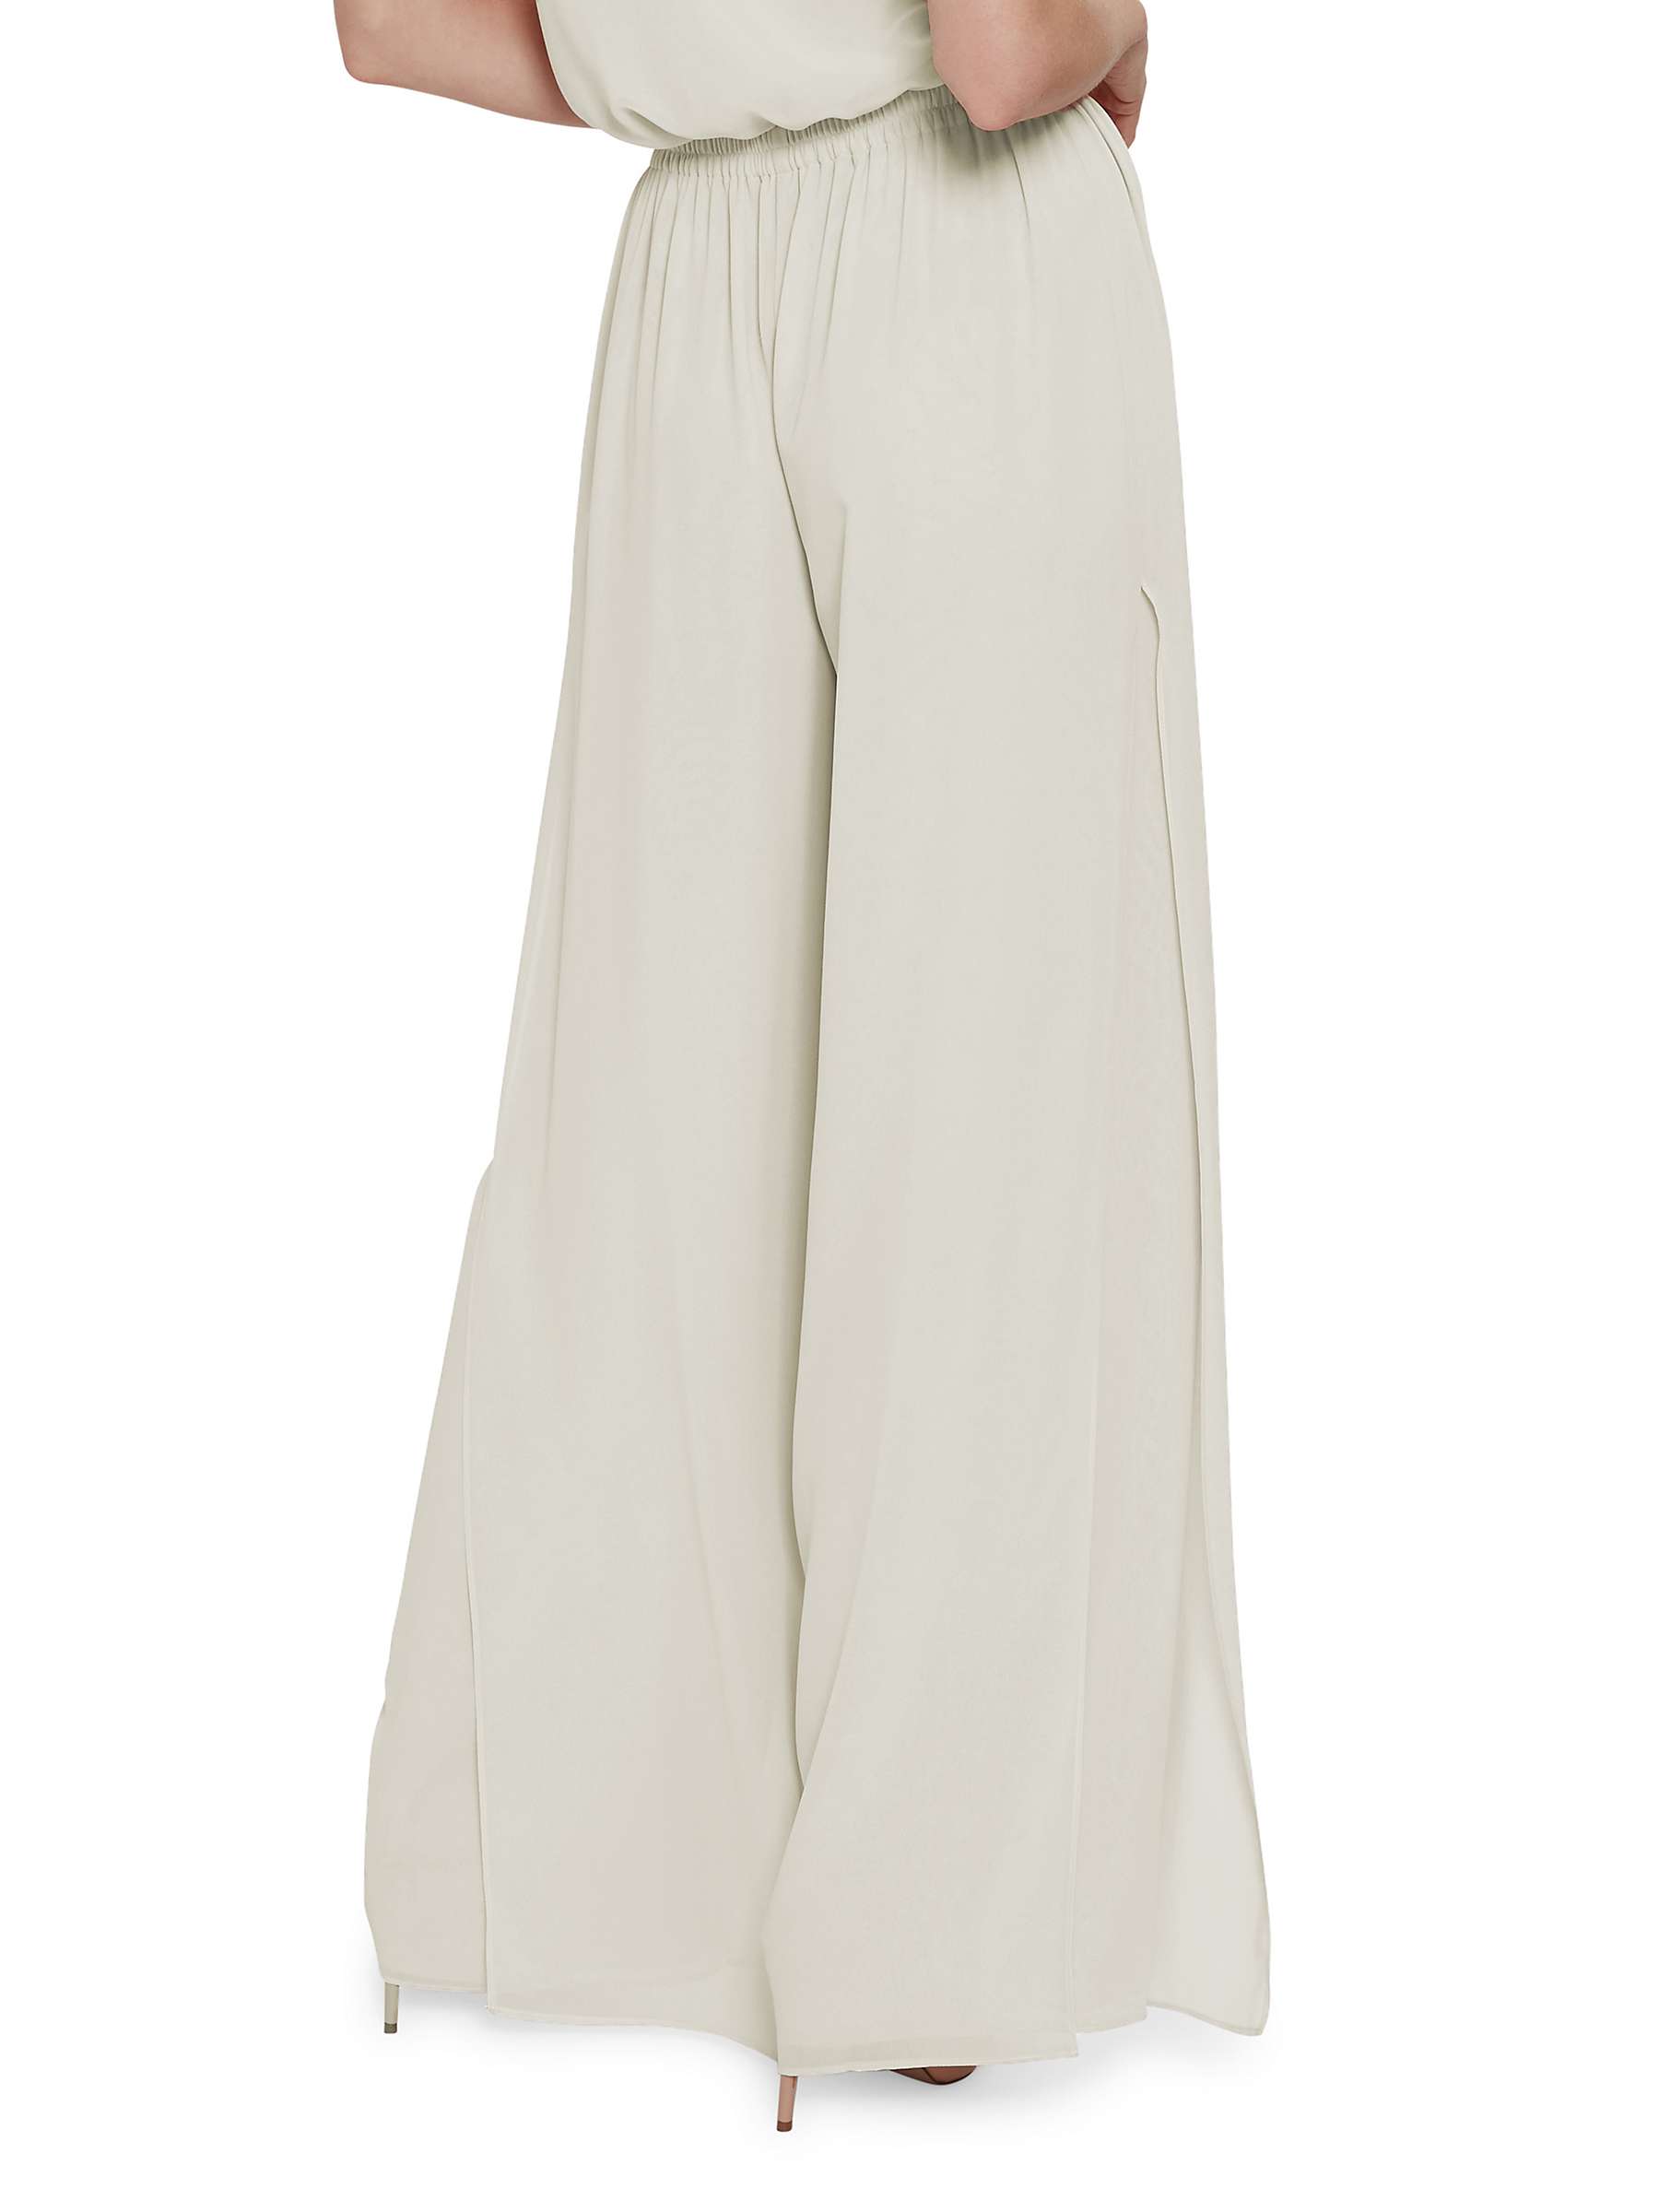 Buy Gina Bacconi Chiffon Layered Wide Leg Trousers, Butter Cream Online at johnlewis.com